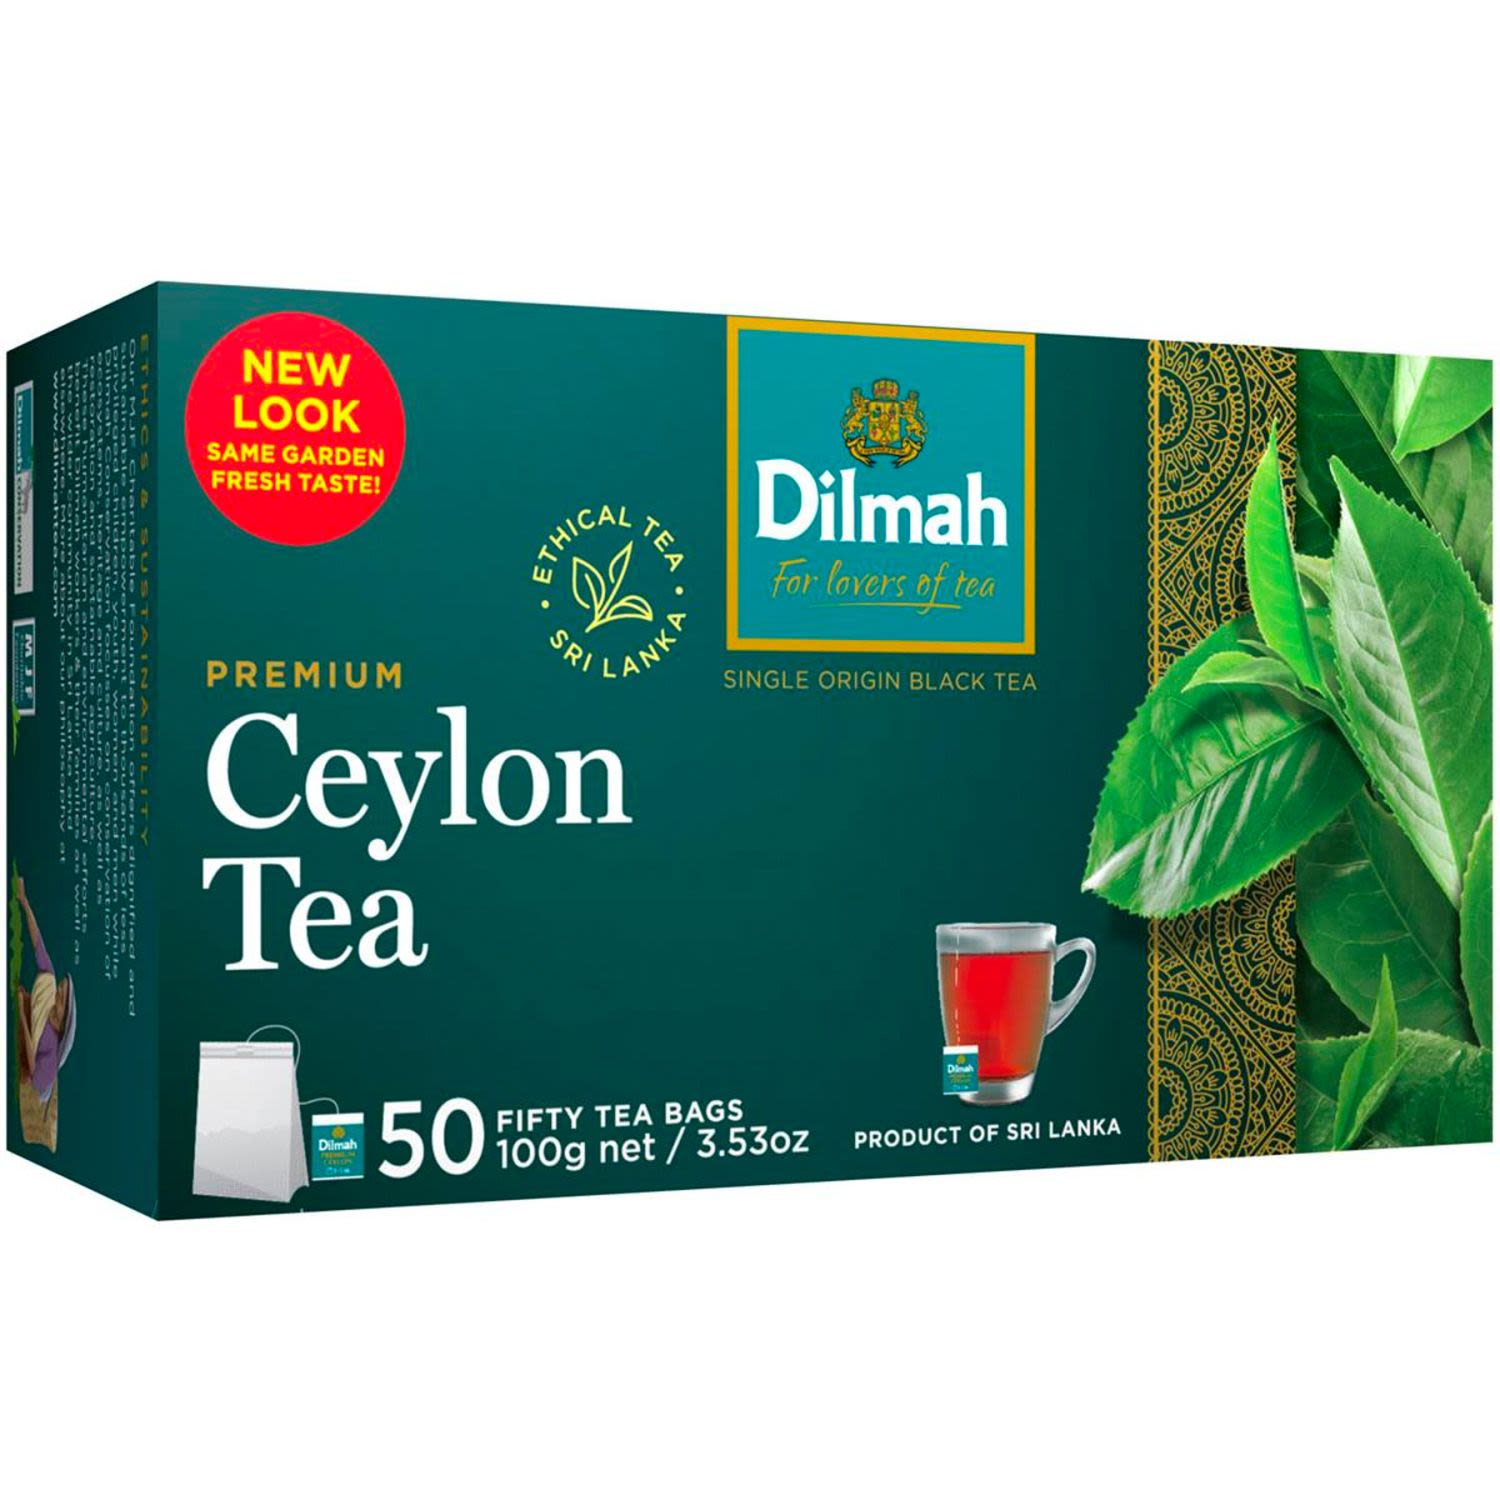 Dilmah Premium Tea Bags, 50 Each